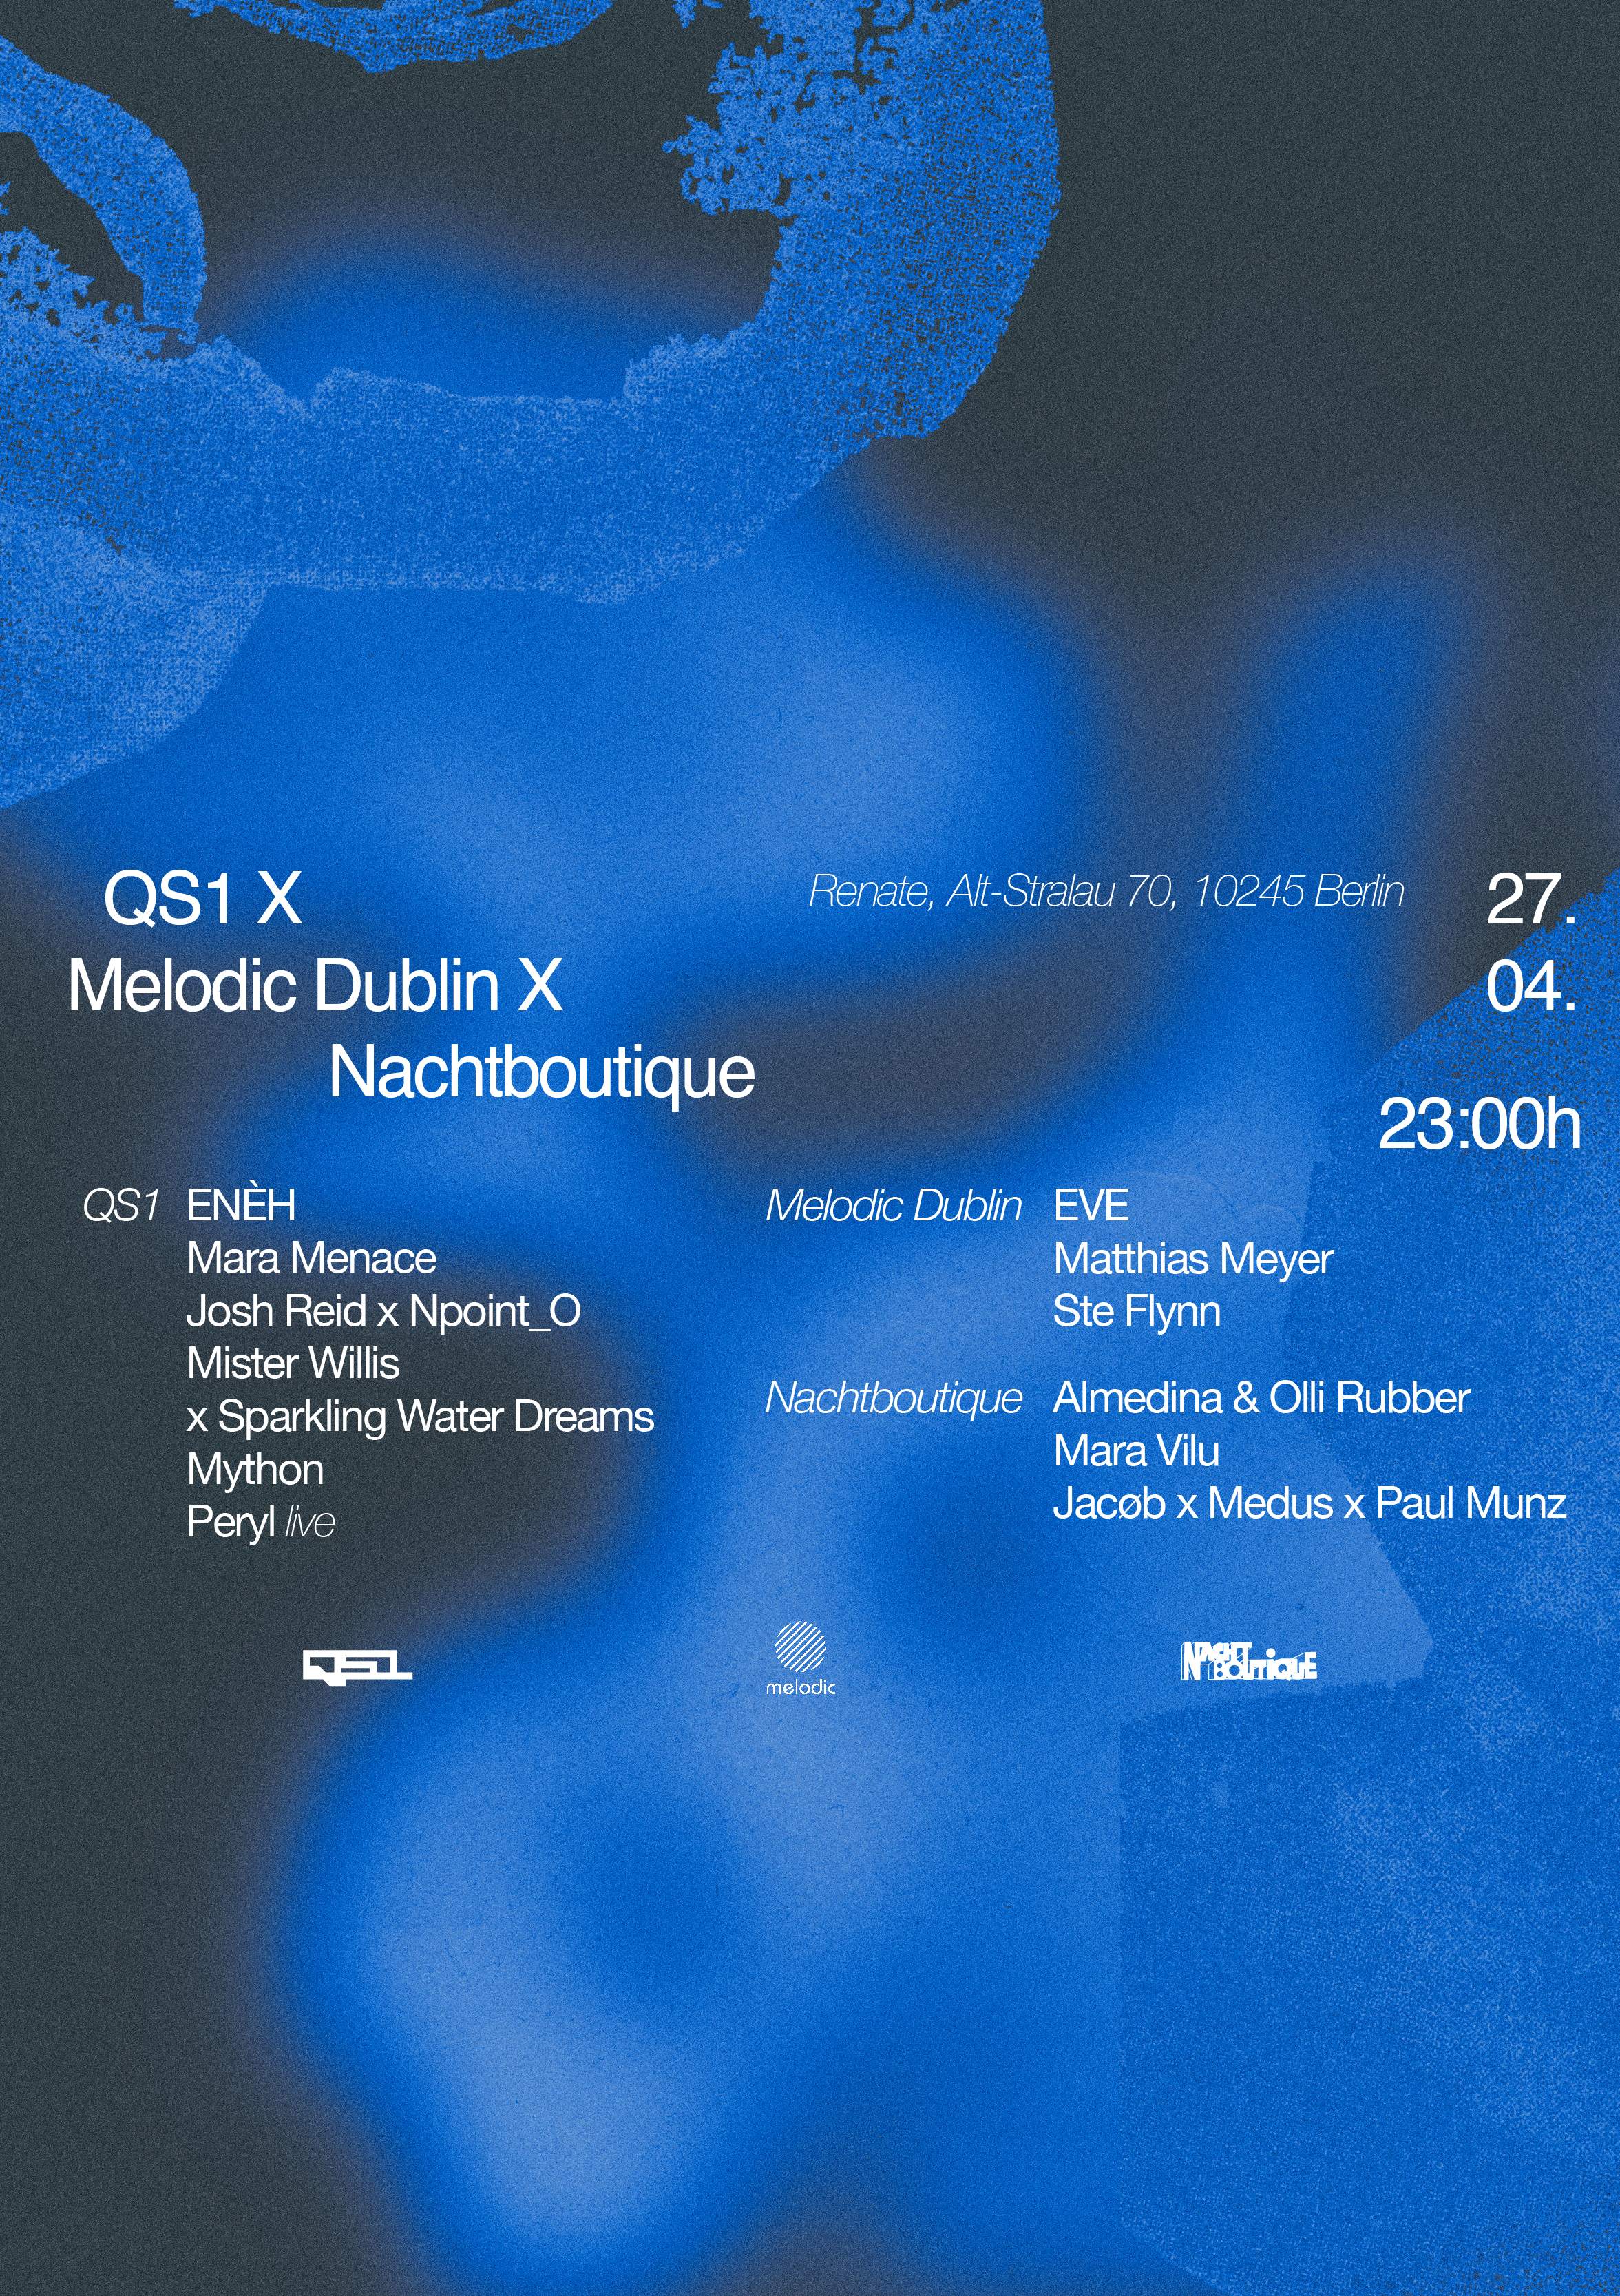 Renate X QS1 X Melodic Dublin X Nachtboutique - フライヤー裏